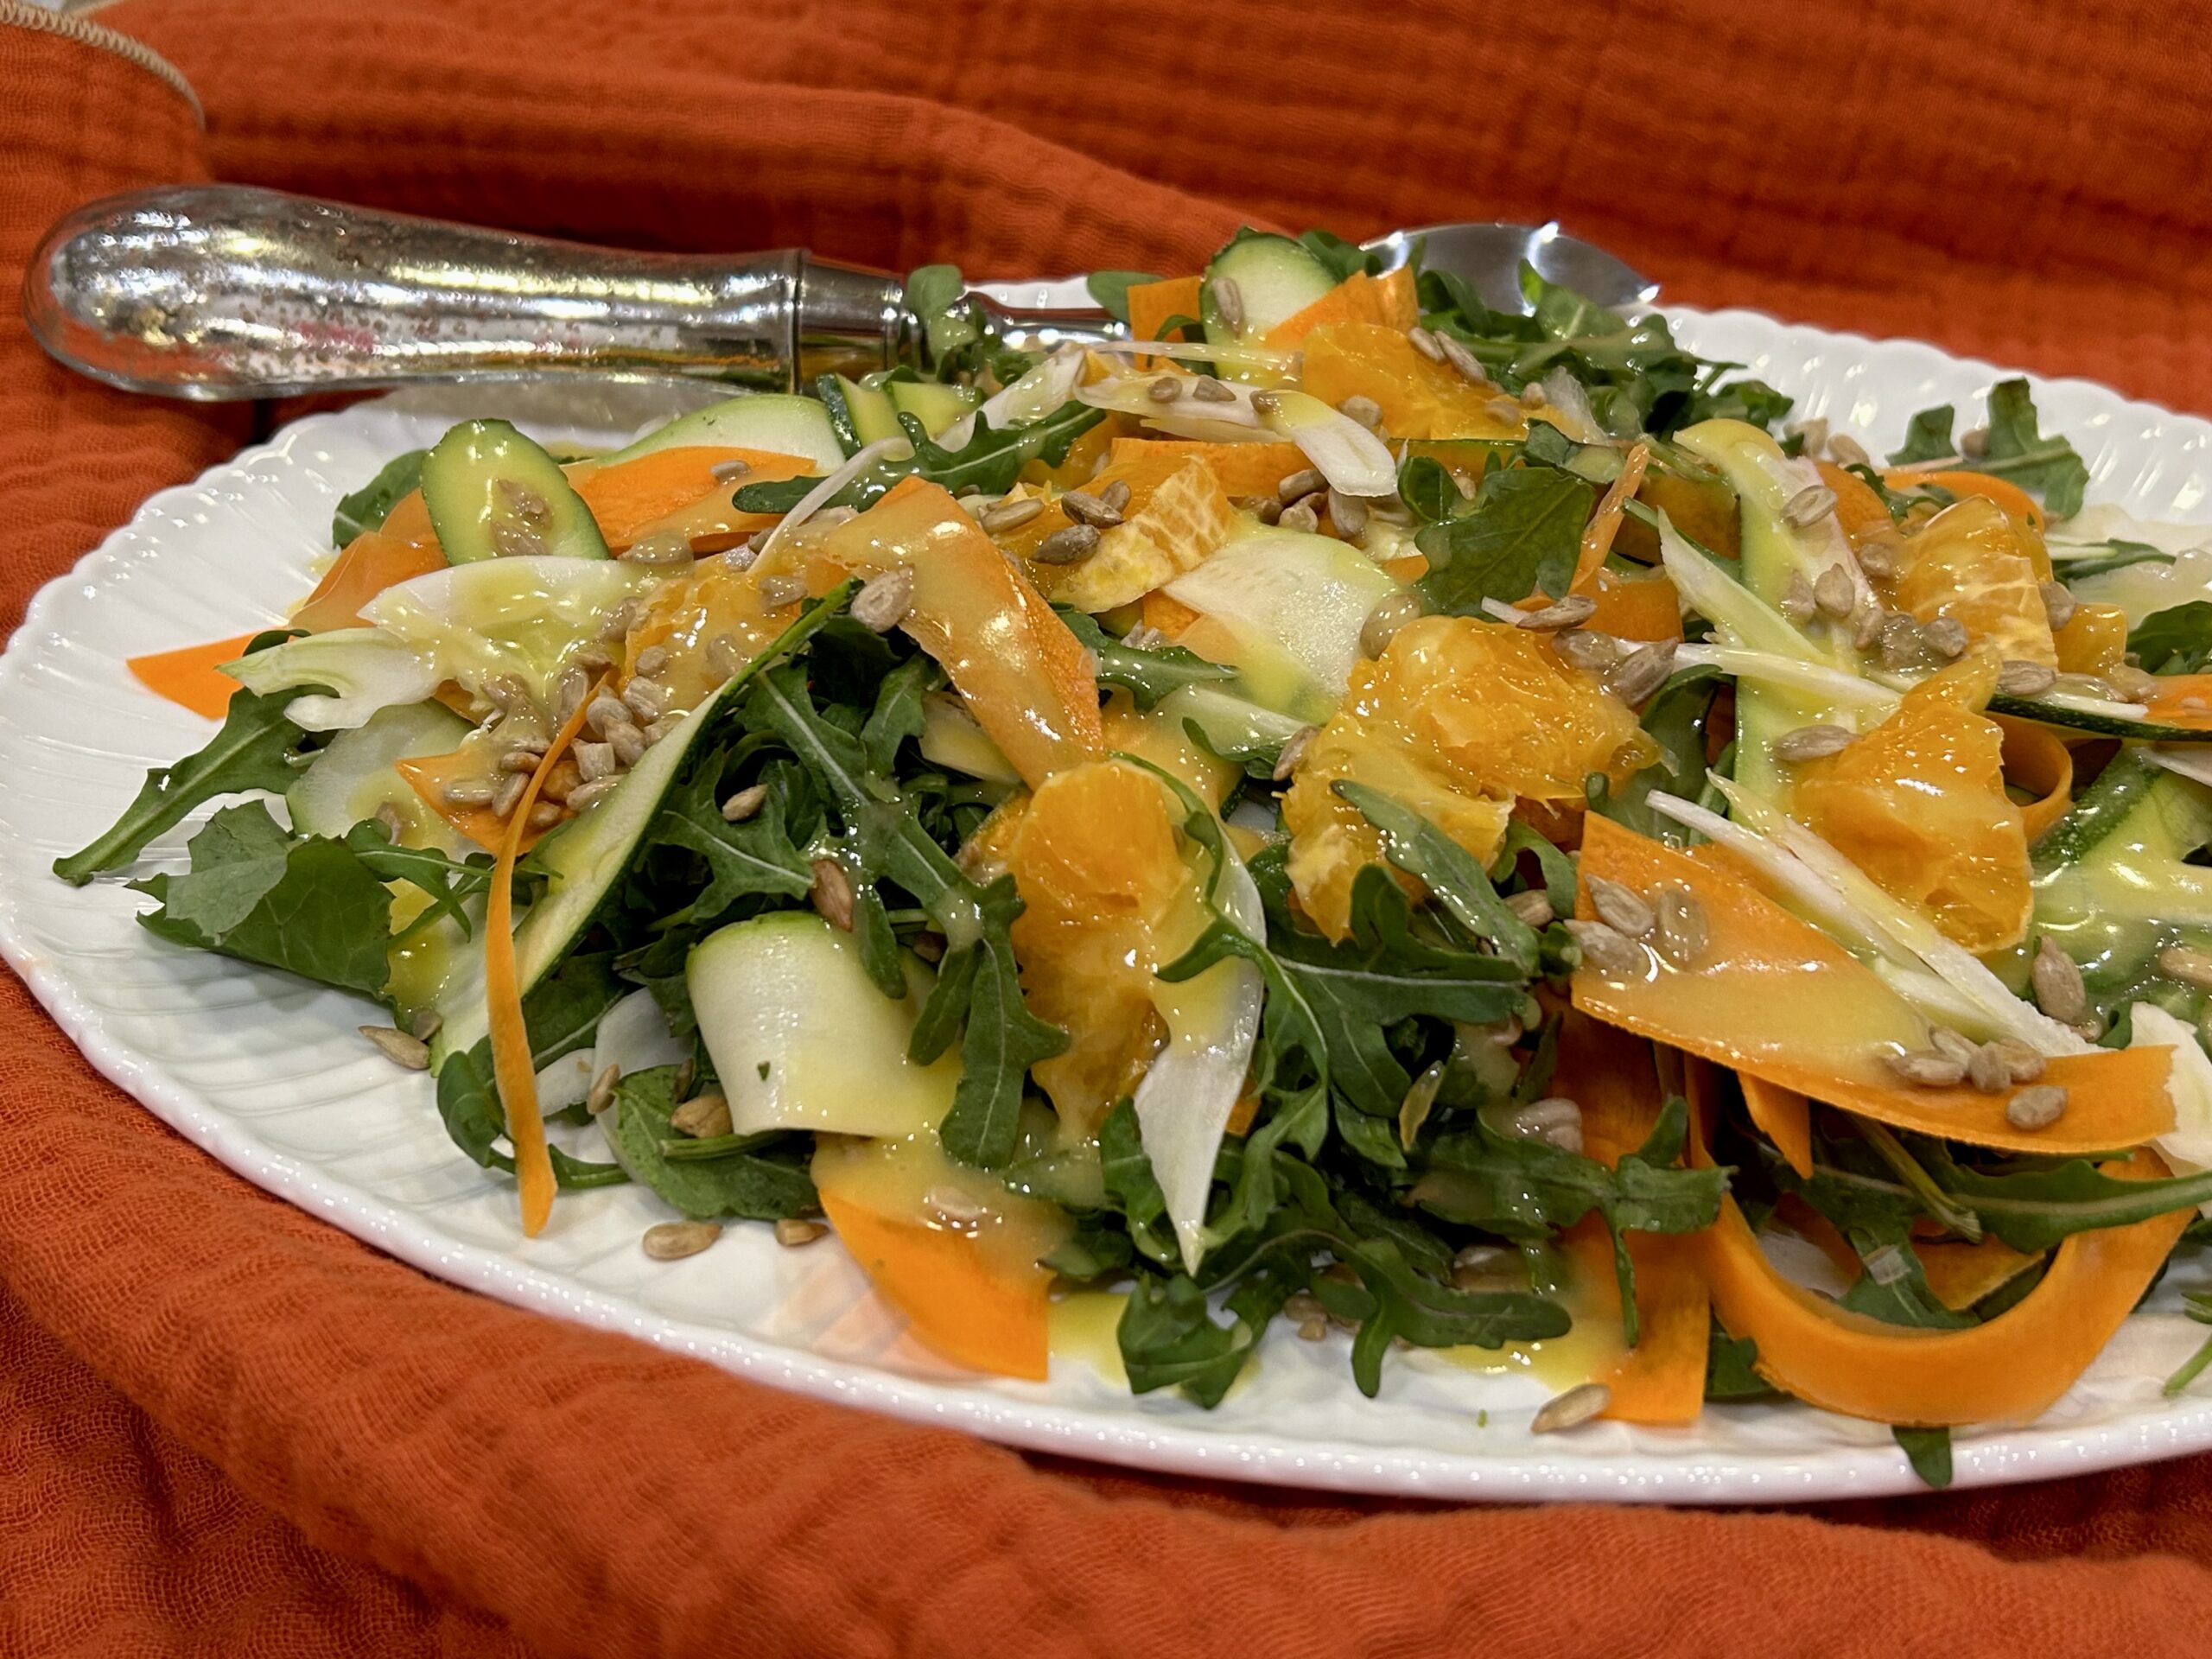 Arugula Salad with Ribbons of Vegetables & Citrus Dressing